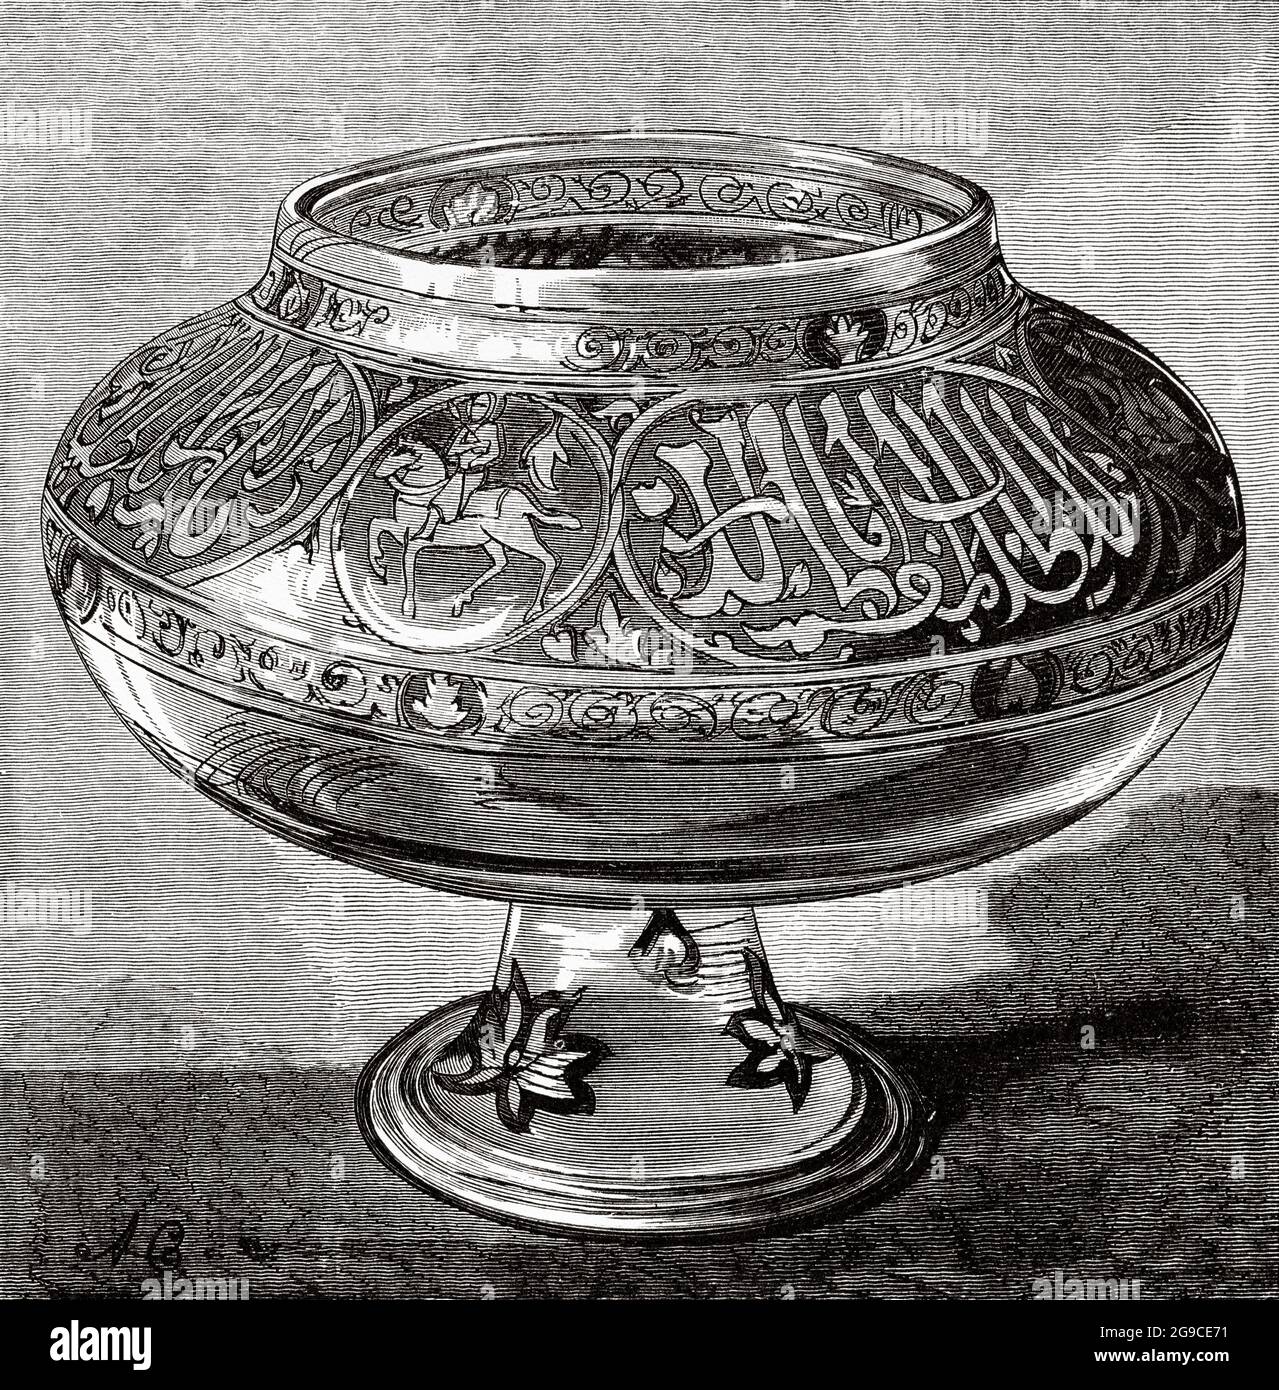 Antique Arabic enameled glass vase, Egypt, North Africa. Old 19th century engraved illustration from El Mundo Ilustrado 1879 Stock Photo